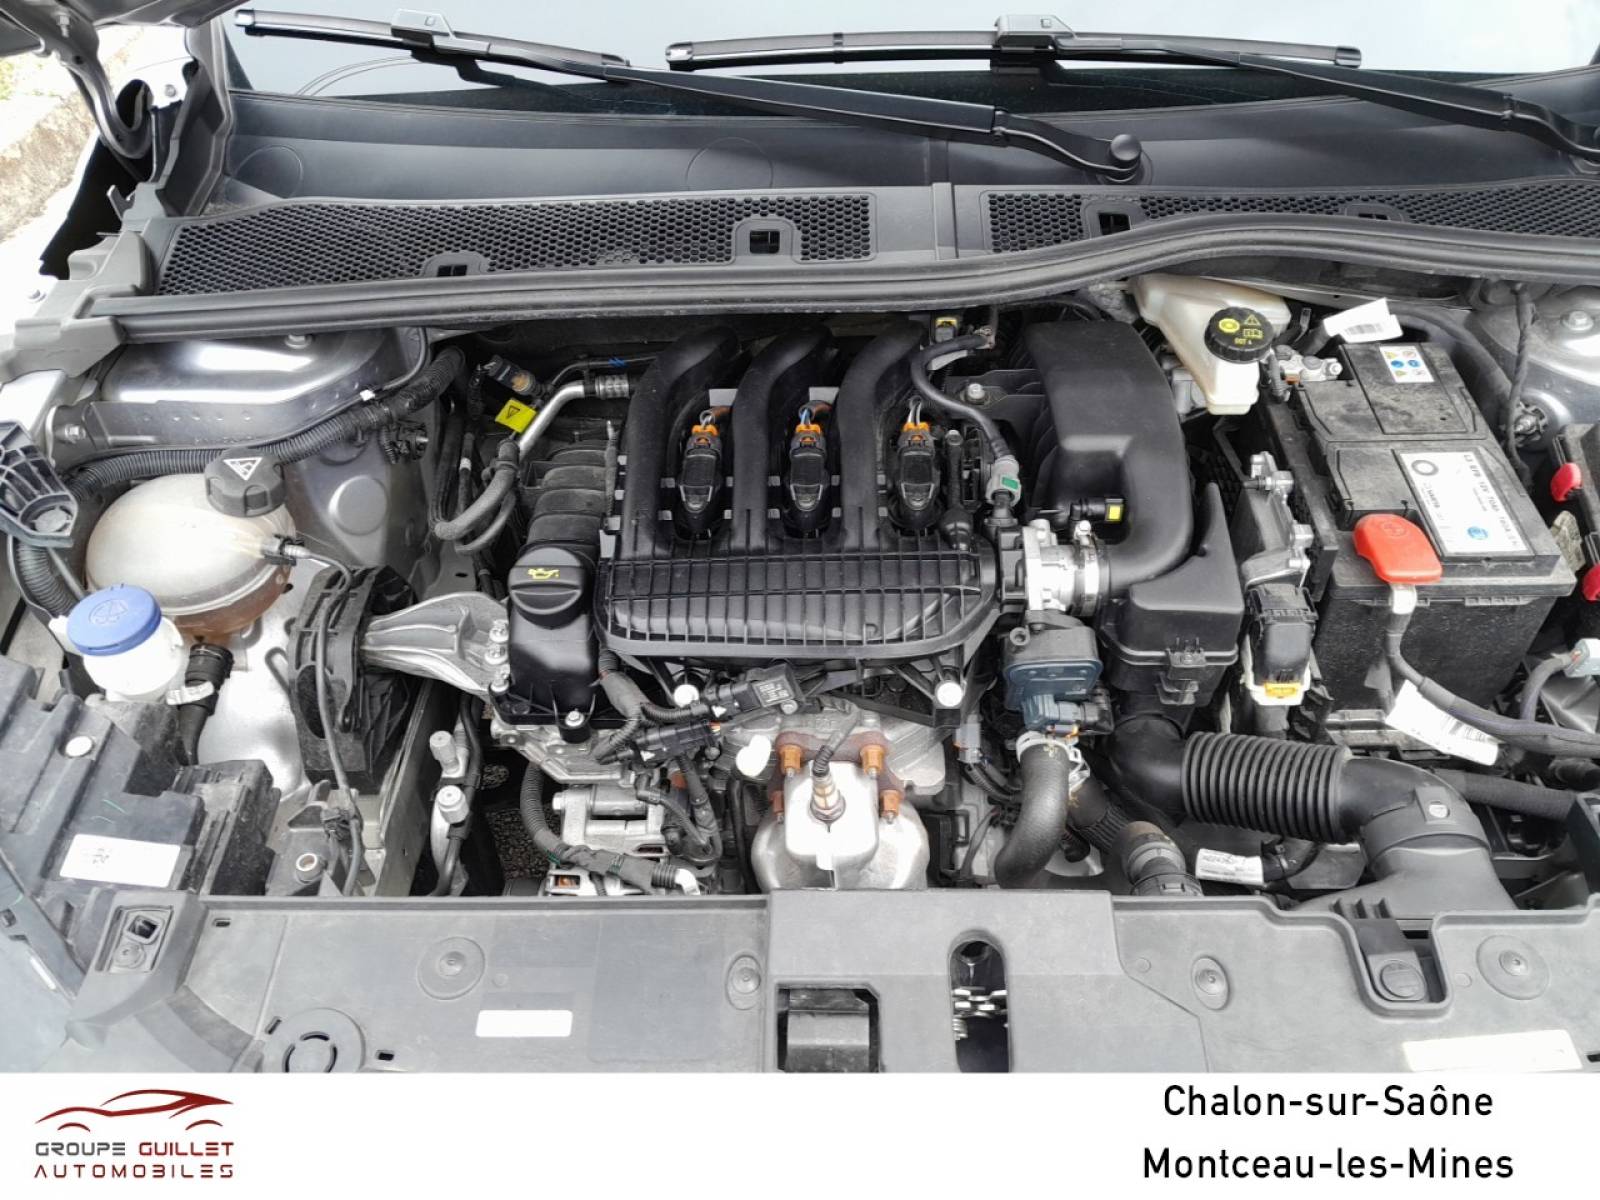 OPEL Corsa 1.2 75 ch BVM5 - véhicule d'occasion - Groupe Guillet - Opel Magicauto Chalon - 71380 - Saint-Marcel - 34